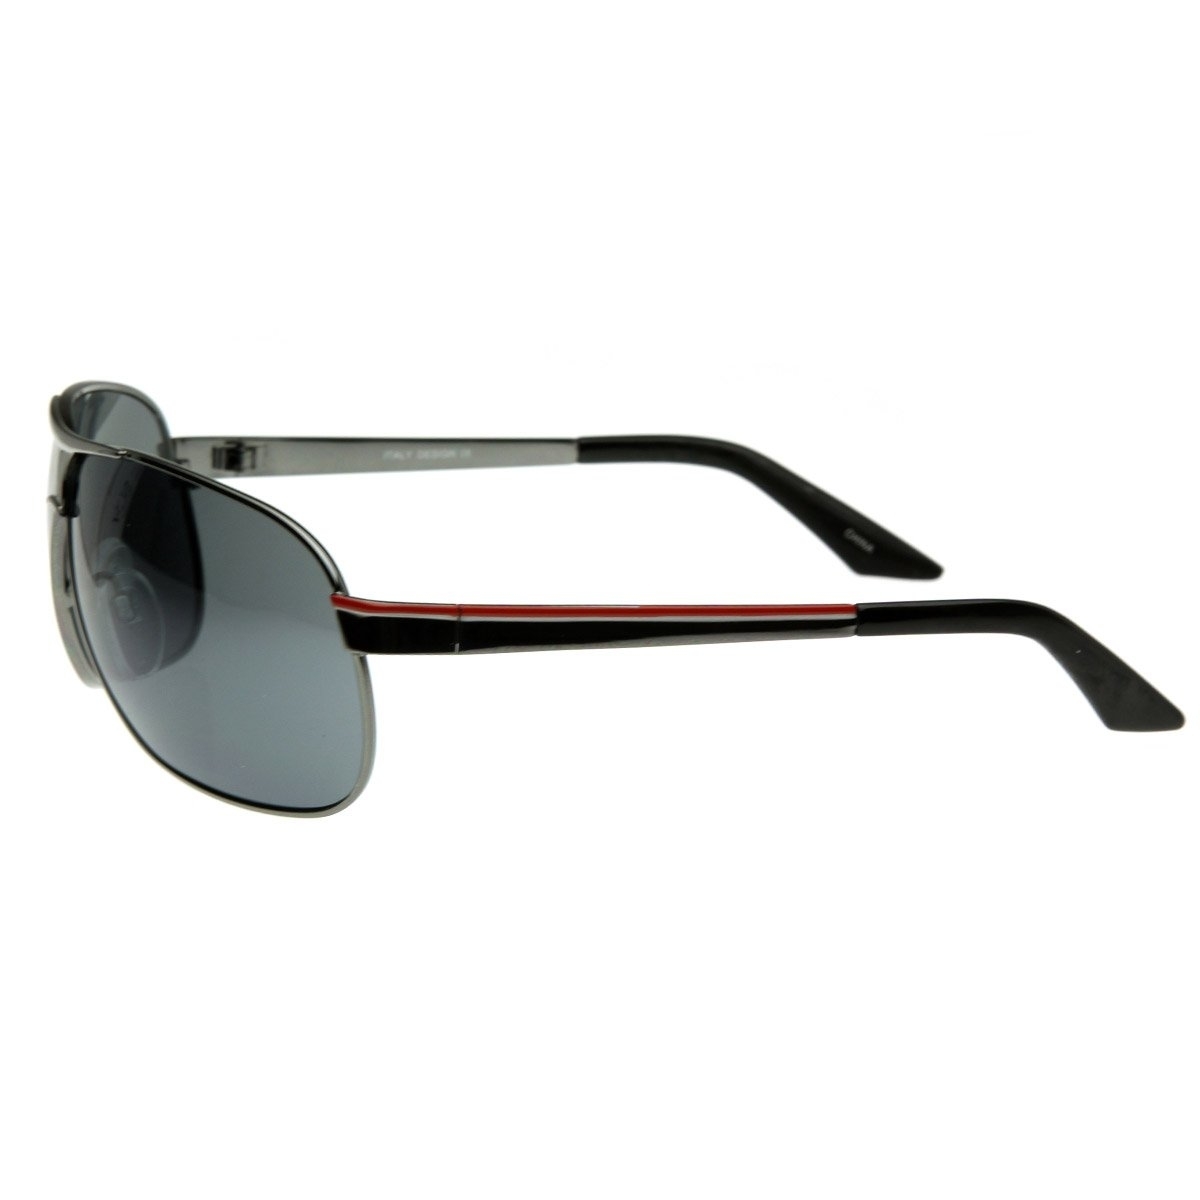 Square Aviator Large Metal Aviator Sunglasses - Black Red